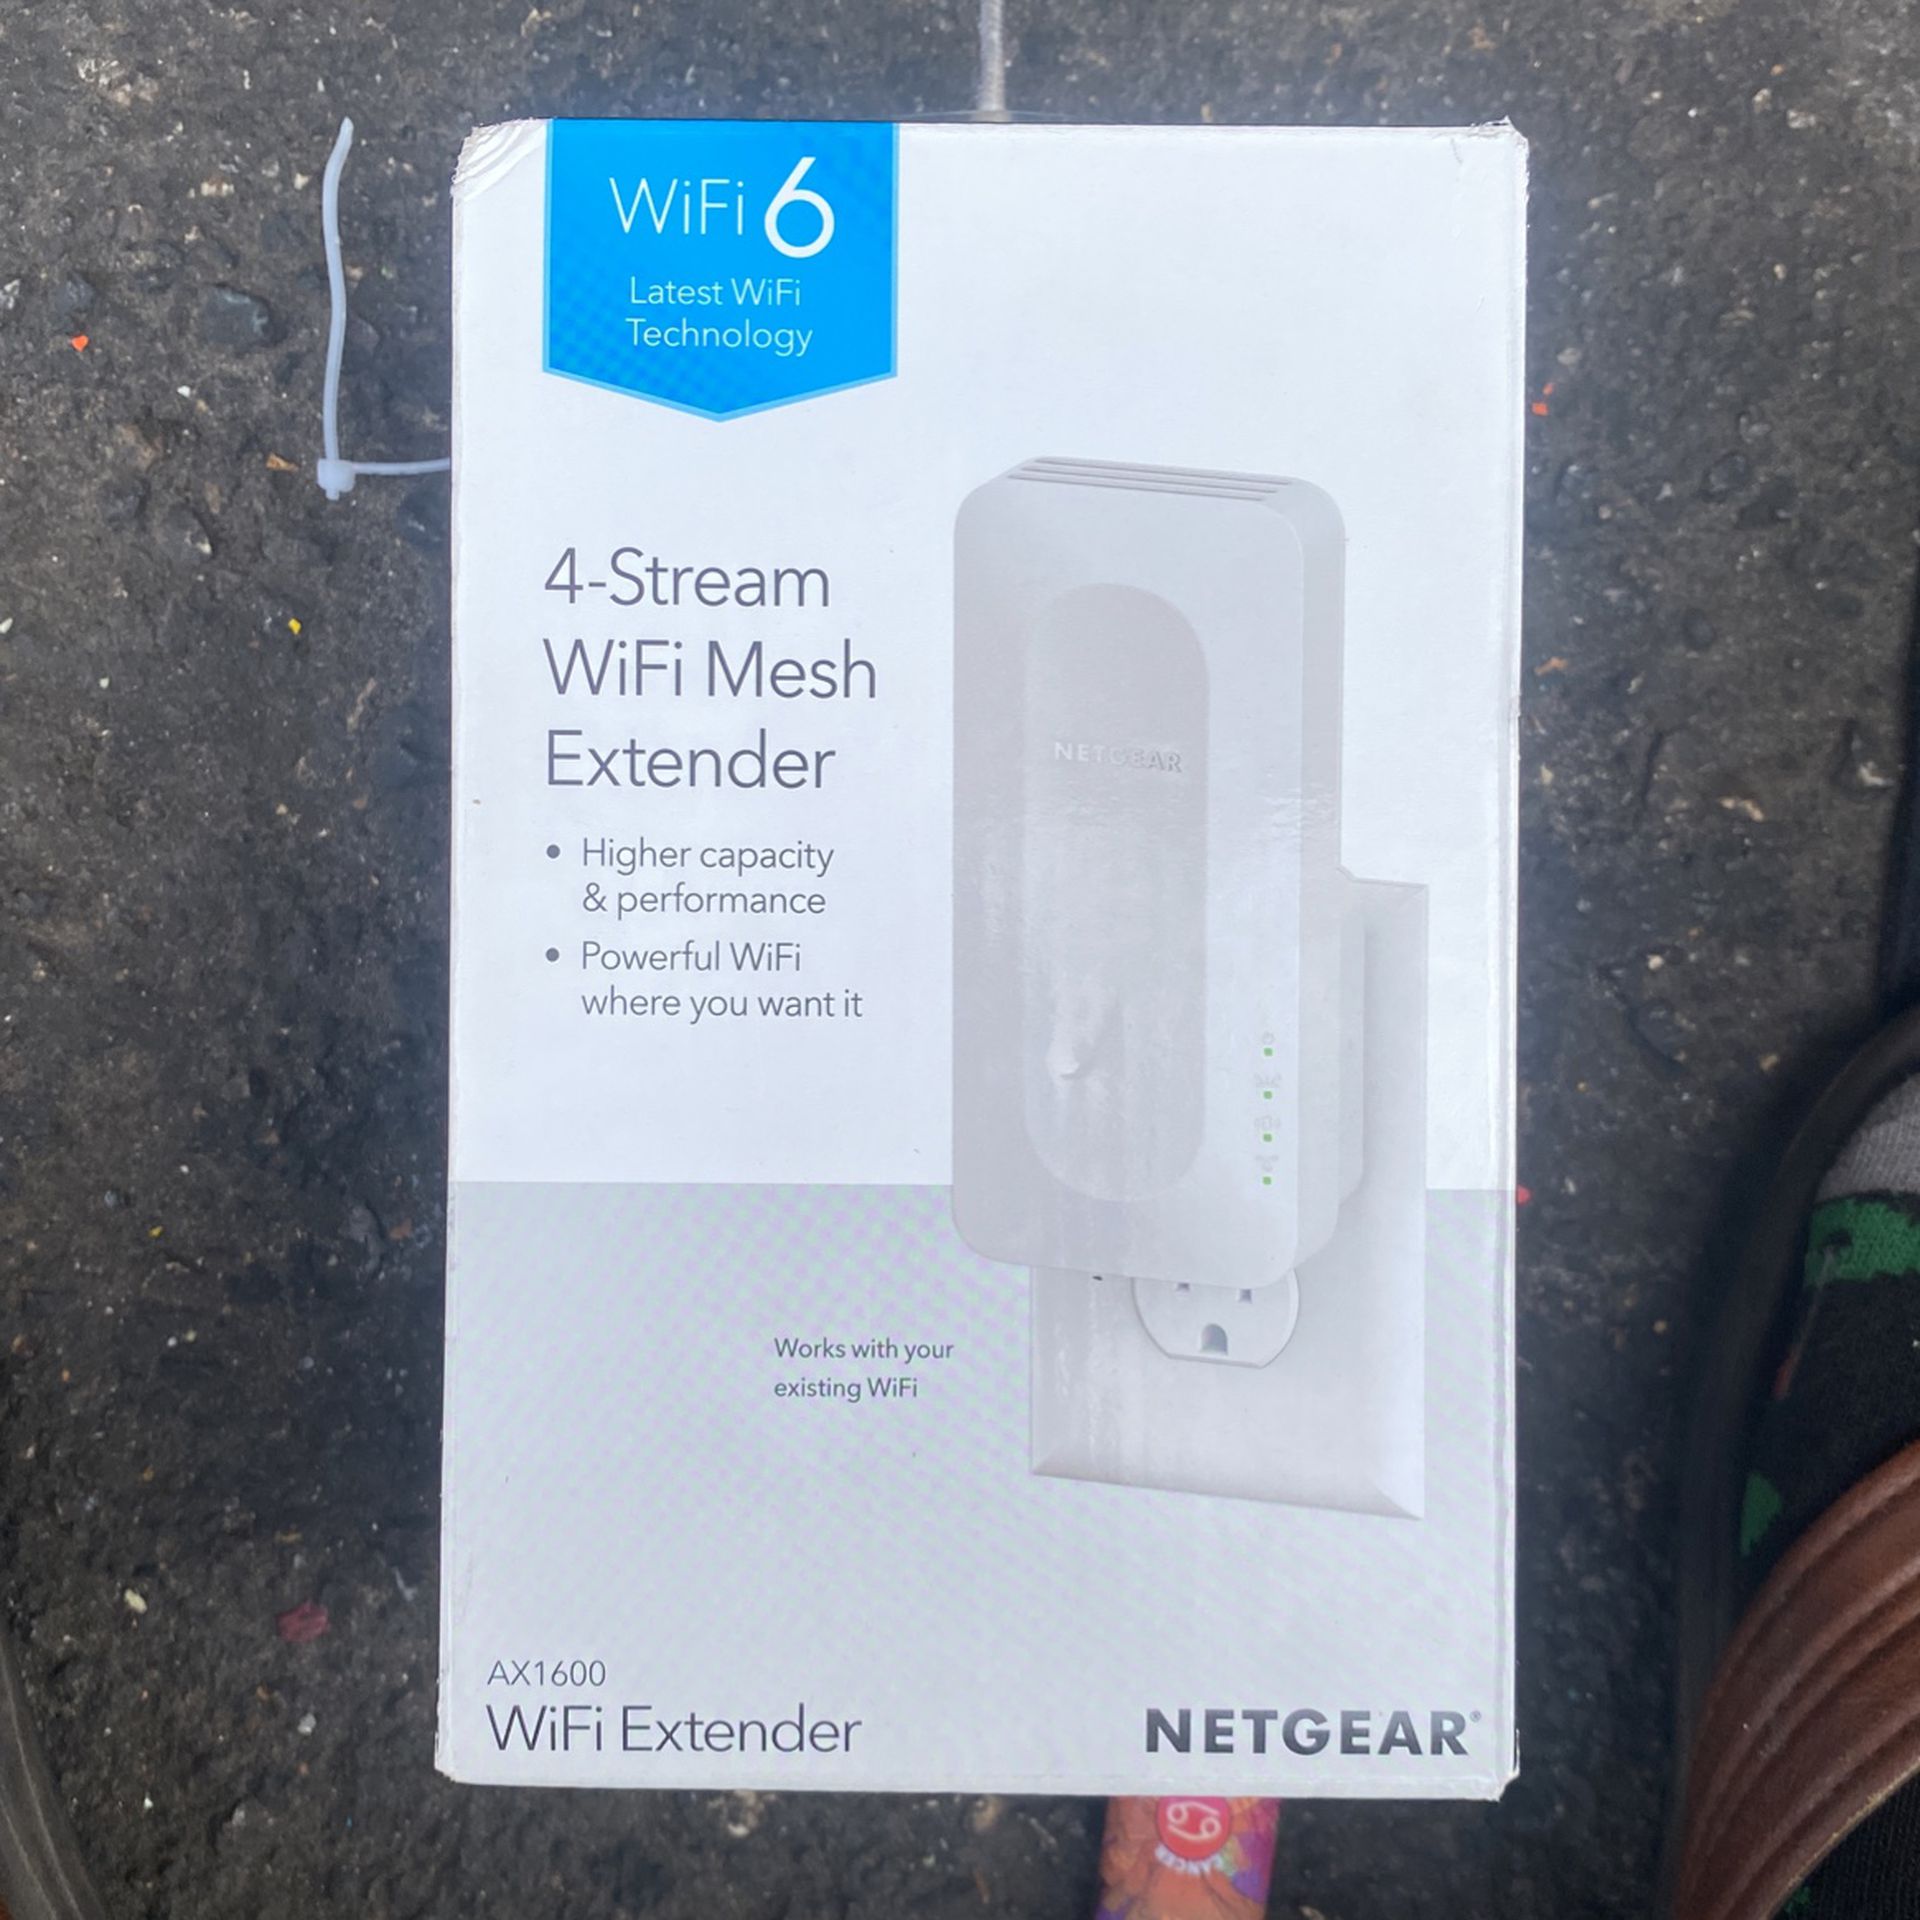 NETGEAR AX1600 Wi-Fi Extender